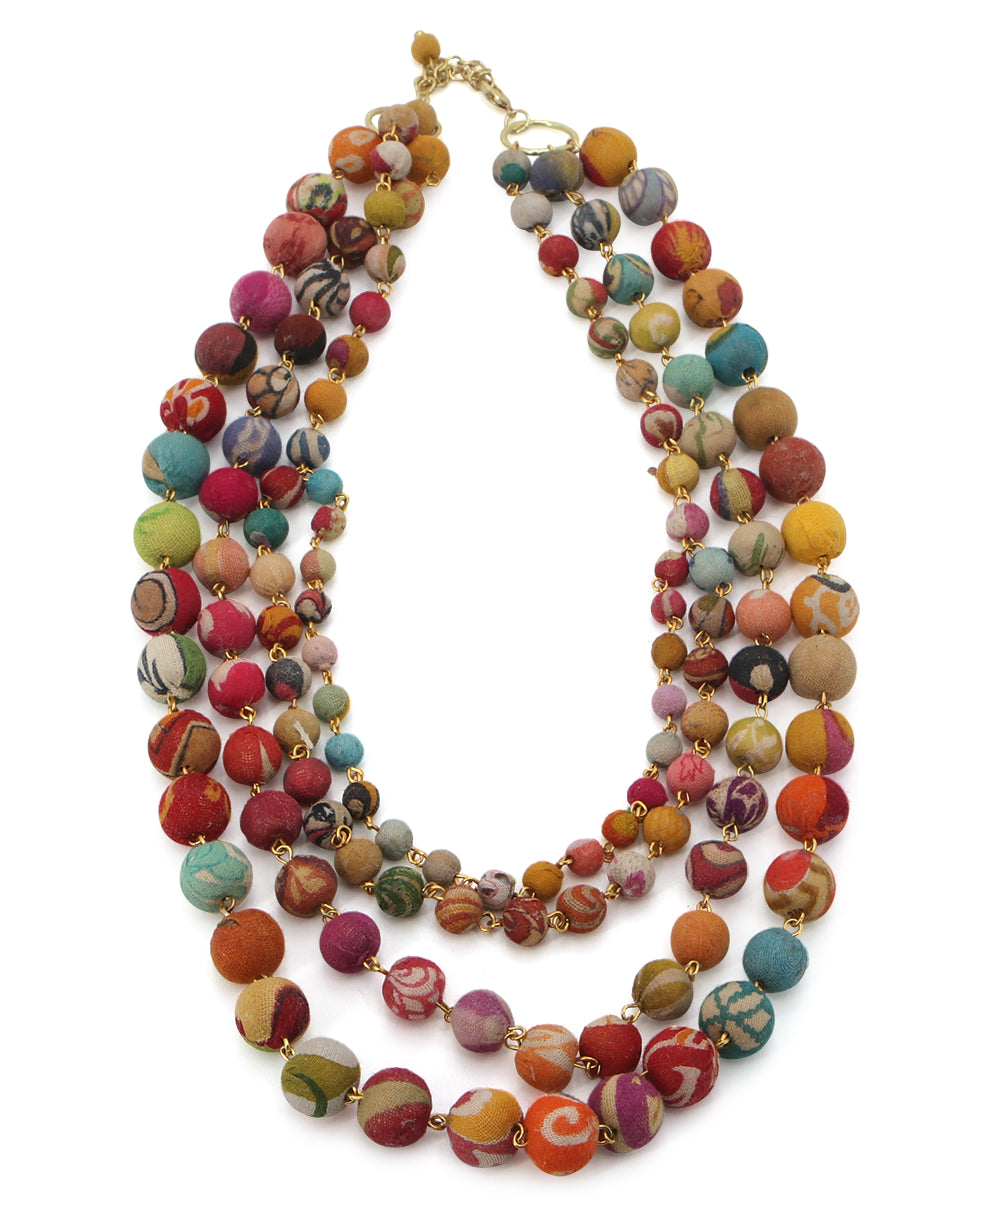 Fairtrade jewelry